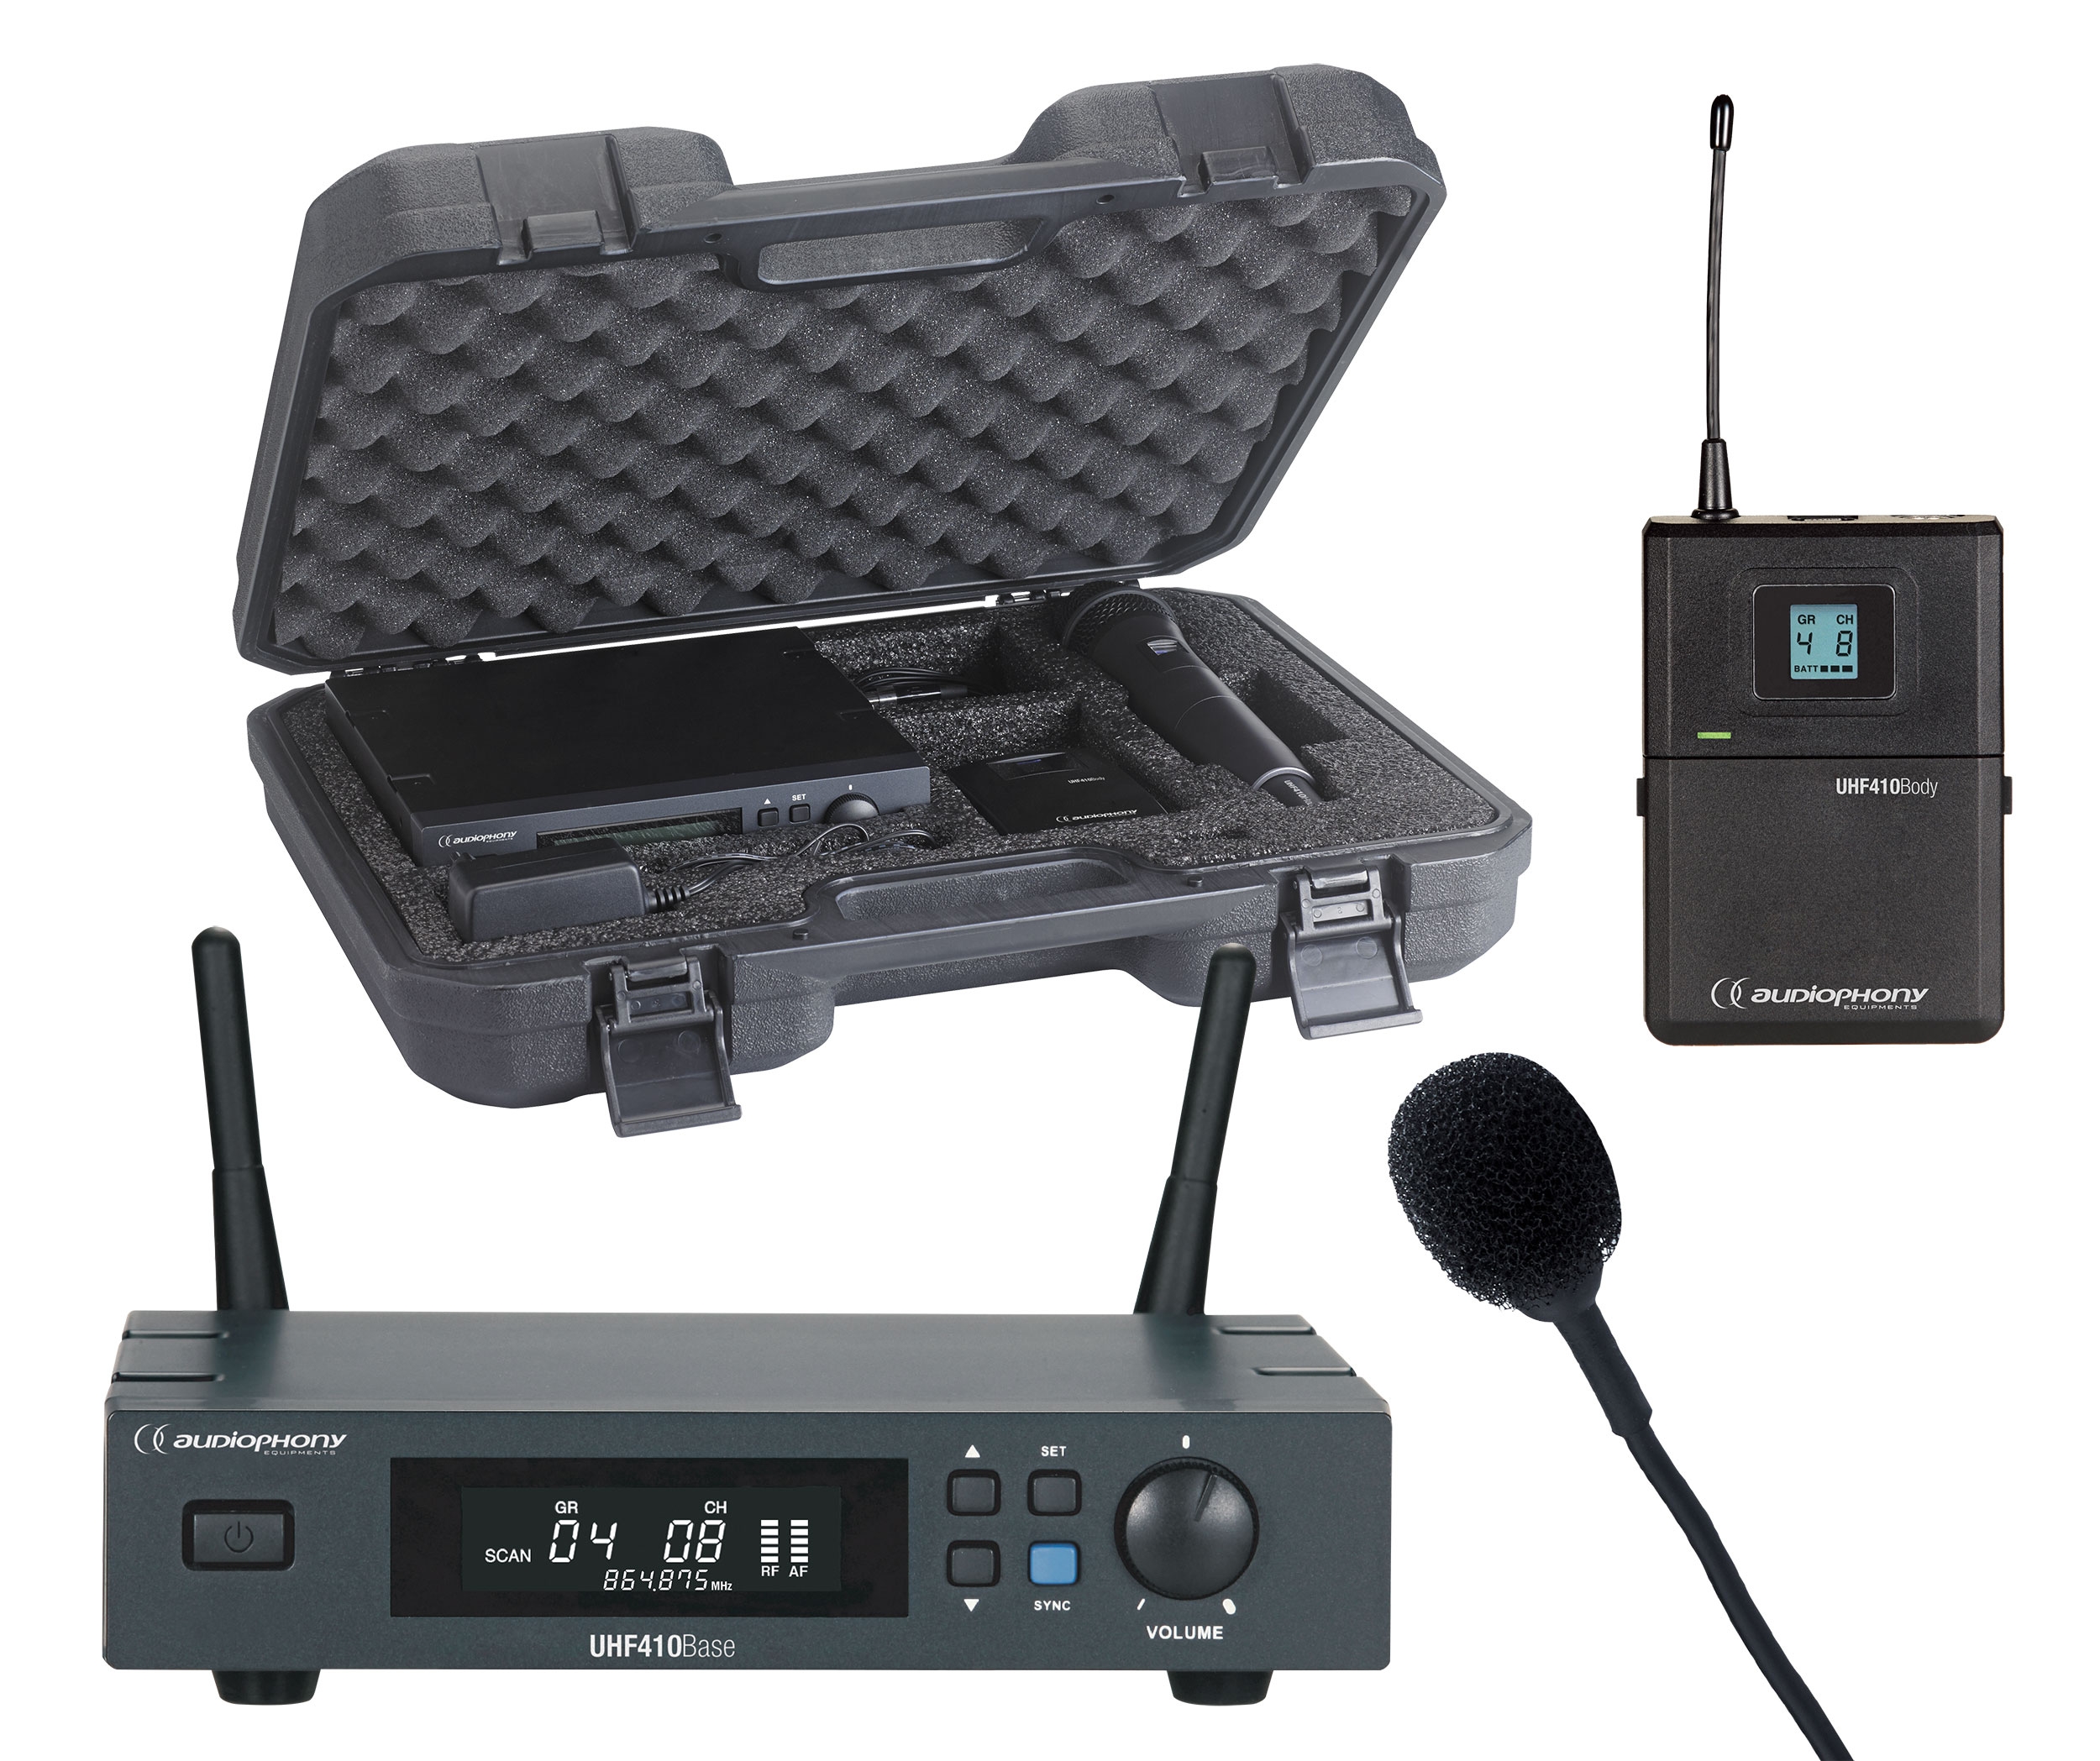 Set including a UHF True Diversity receiver, bodypack, Lavalier microphone and transport case - 500MHz range